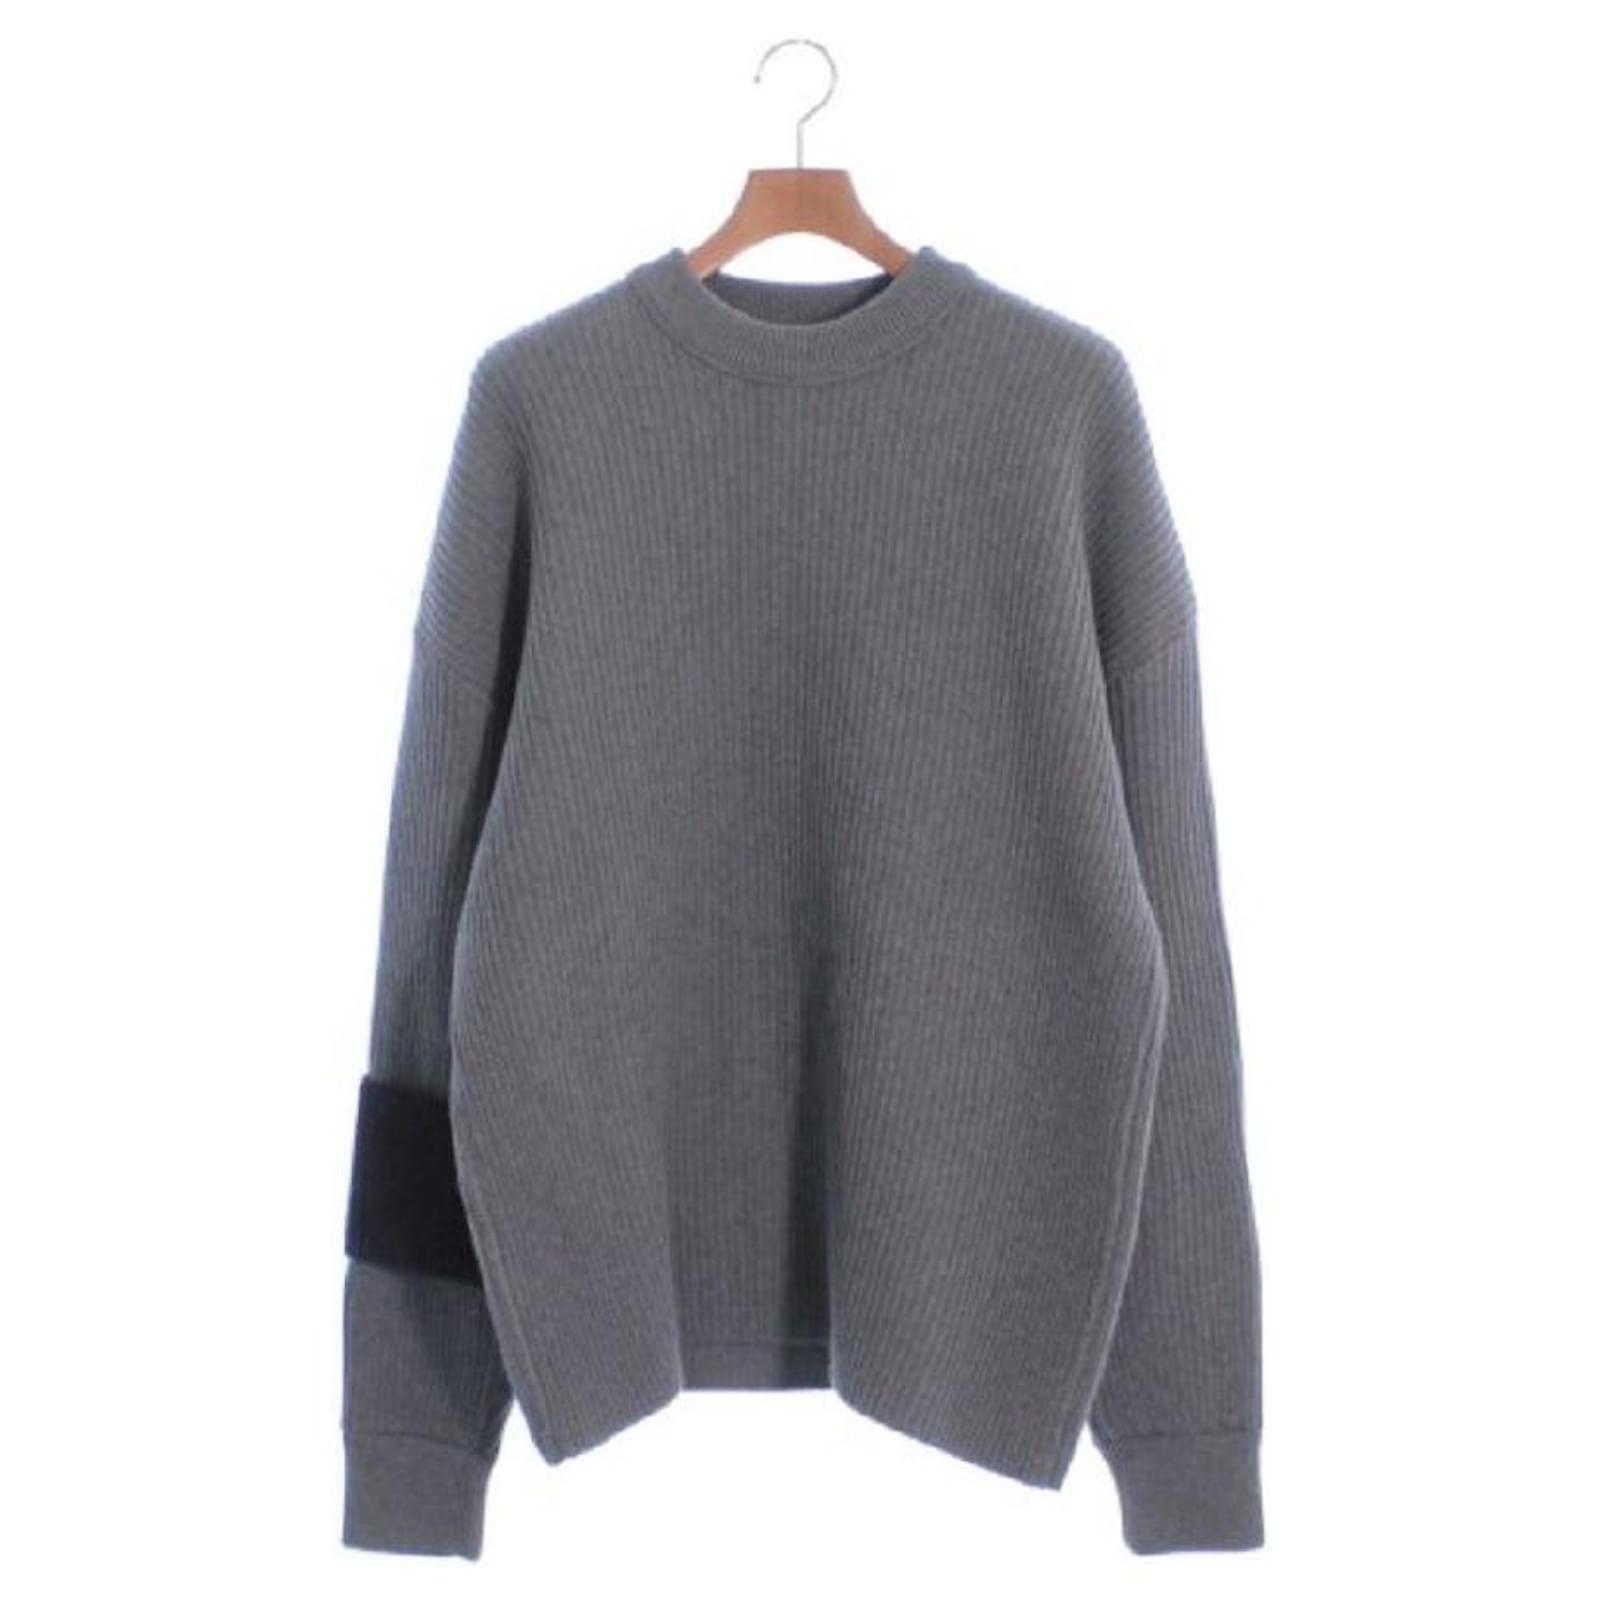 vuitton knit sweater